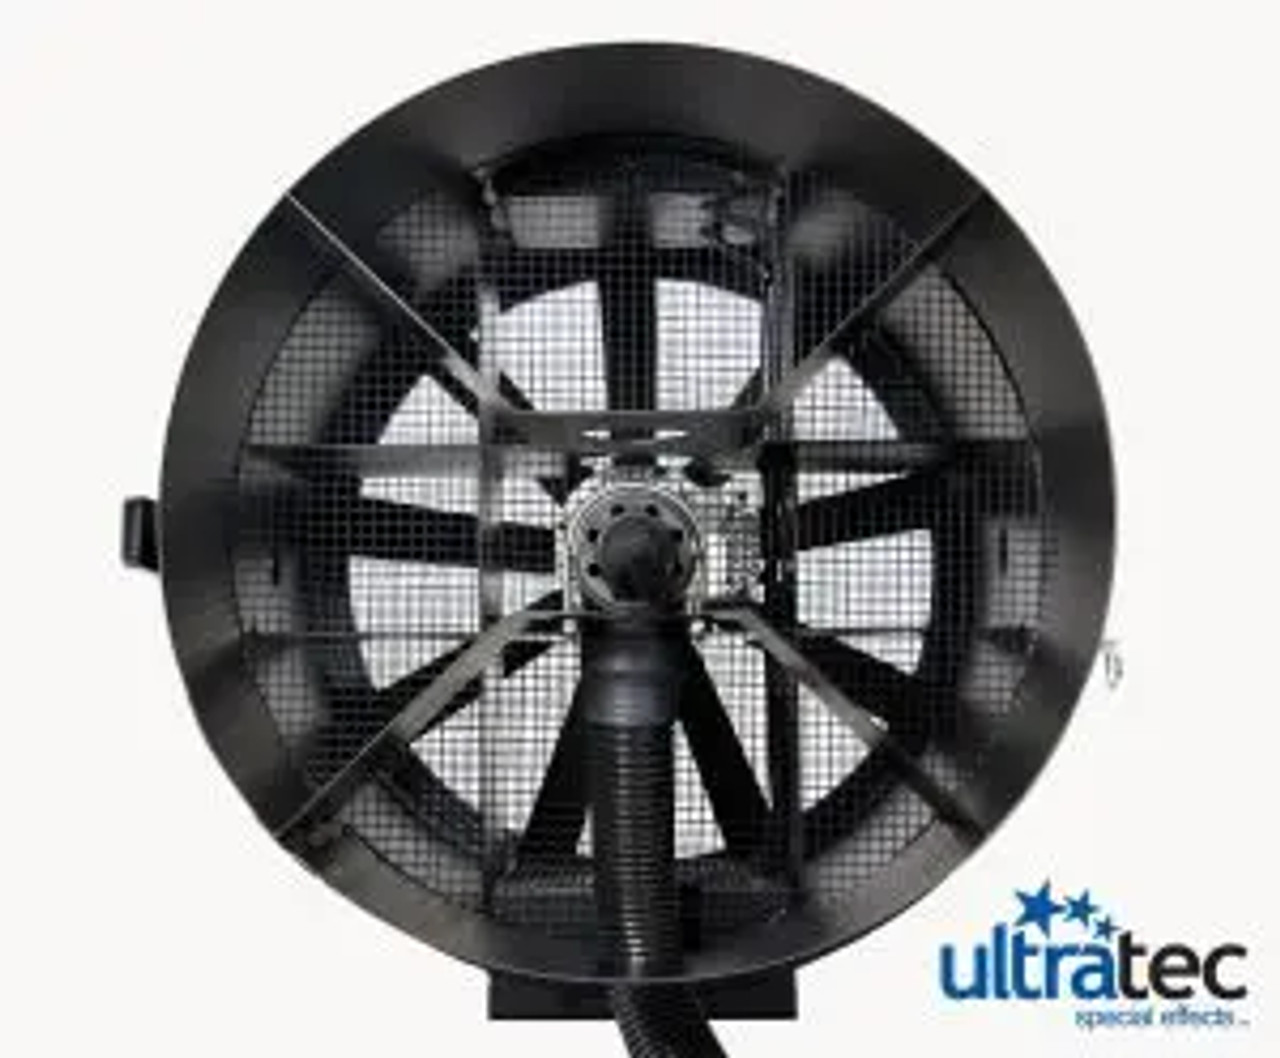 Ultratec Turbo Fan Snow Machine